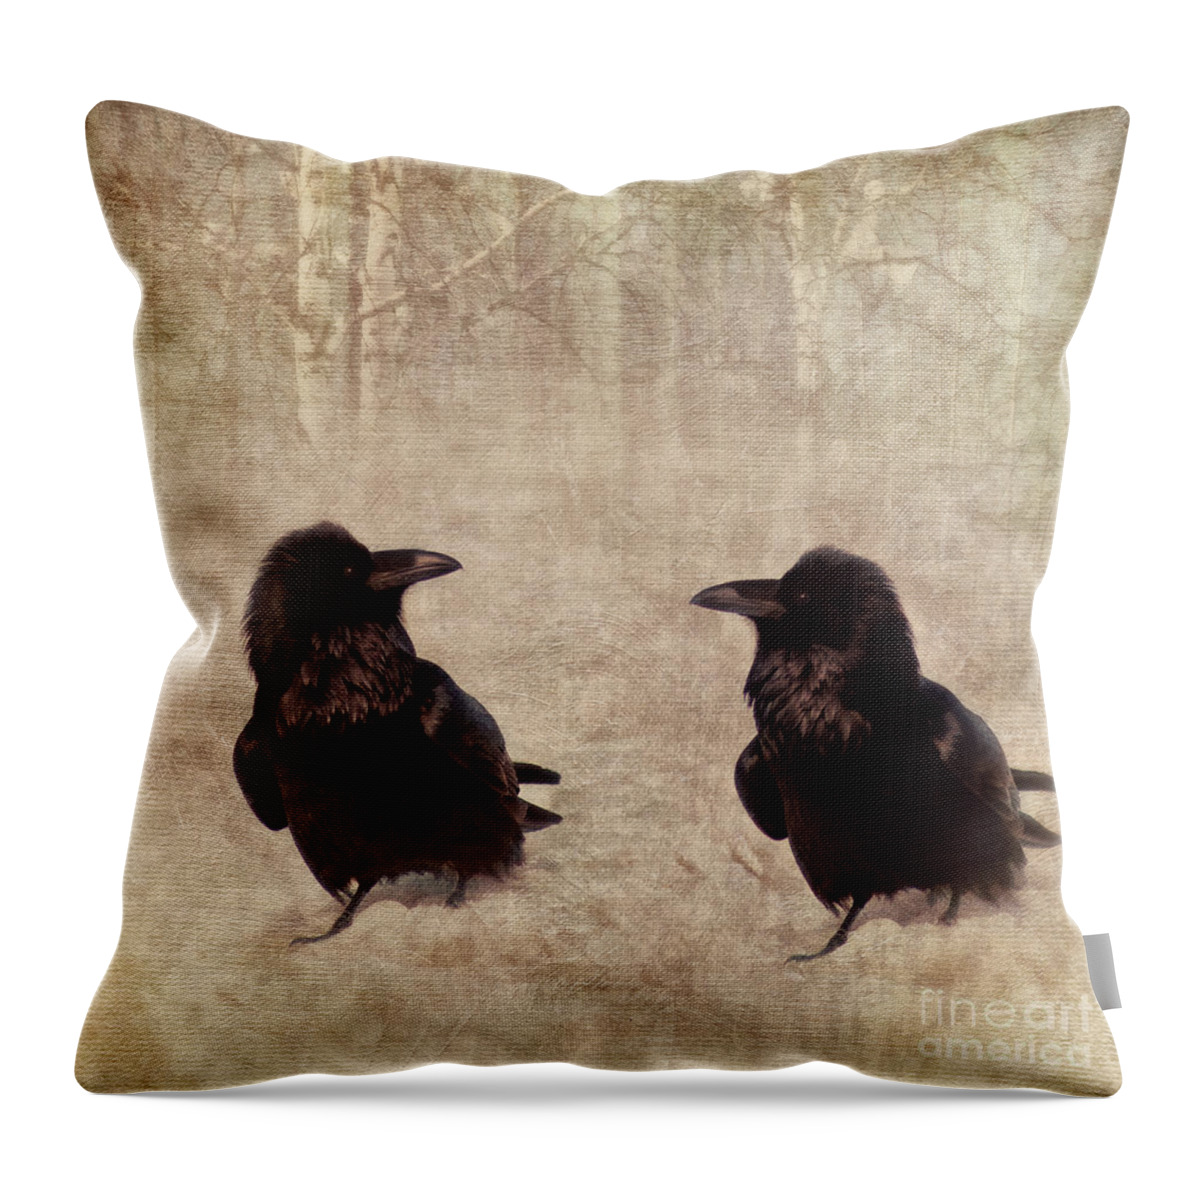 Raven Throw Pillow featuring the photograph Messenger by Priska Wettstein